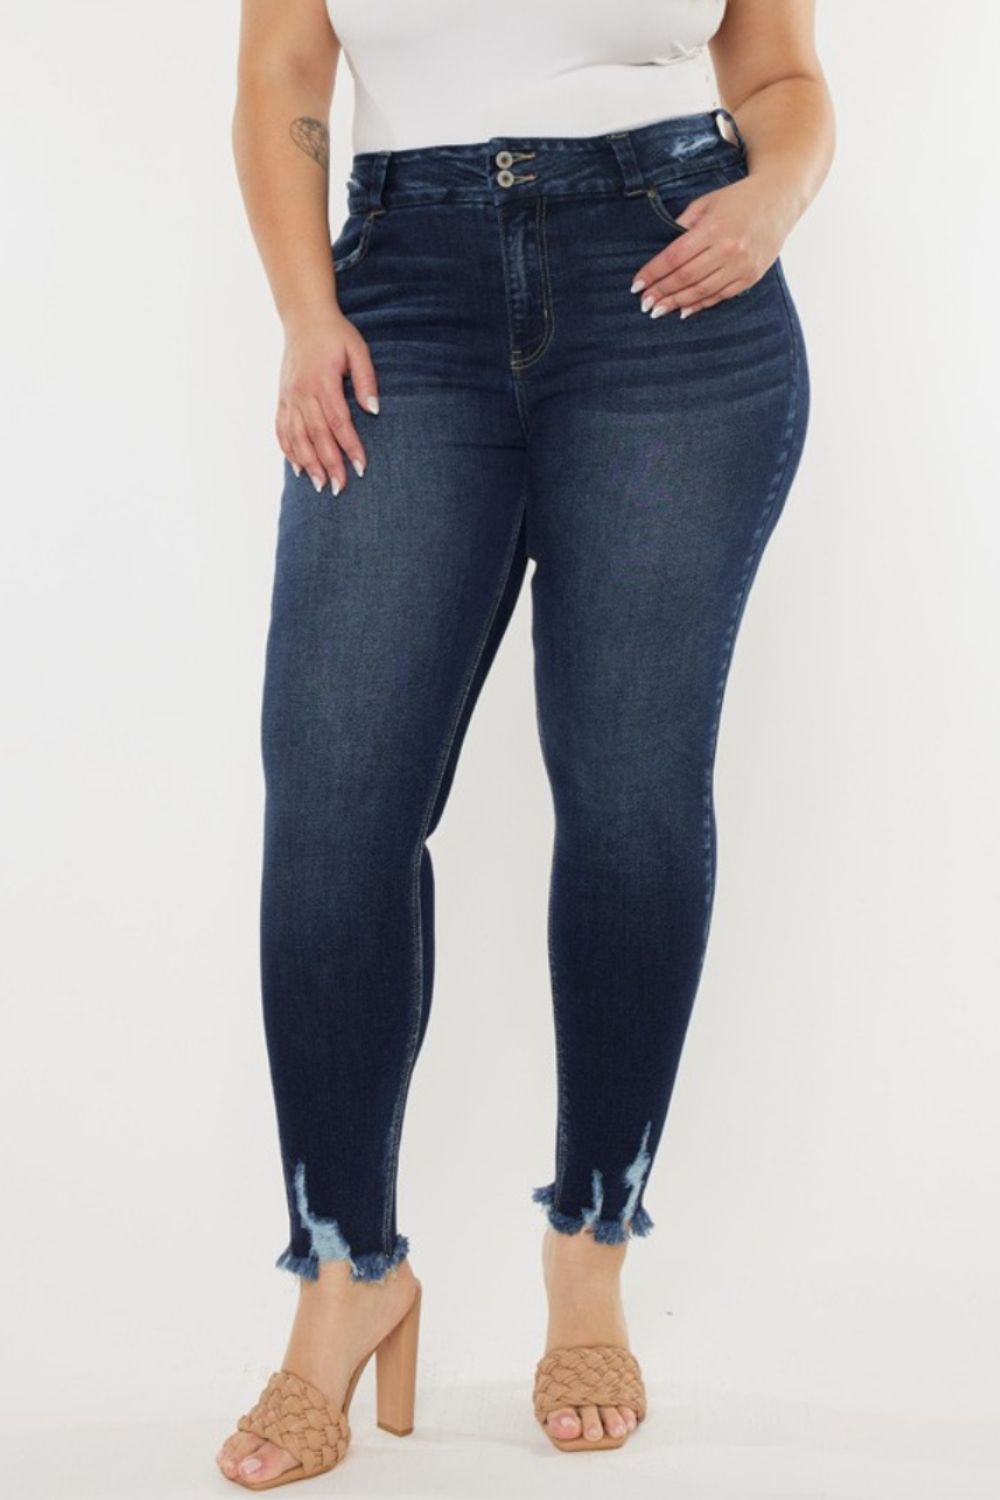 Plus Size Raw Hem High Waist Jeans Pants Muses Of Bohemia Dark 0(23) 